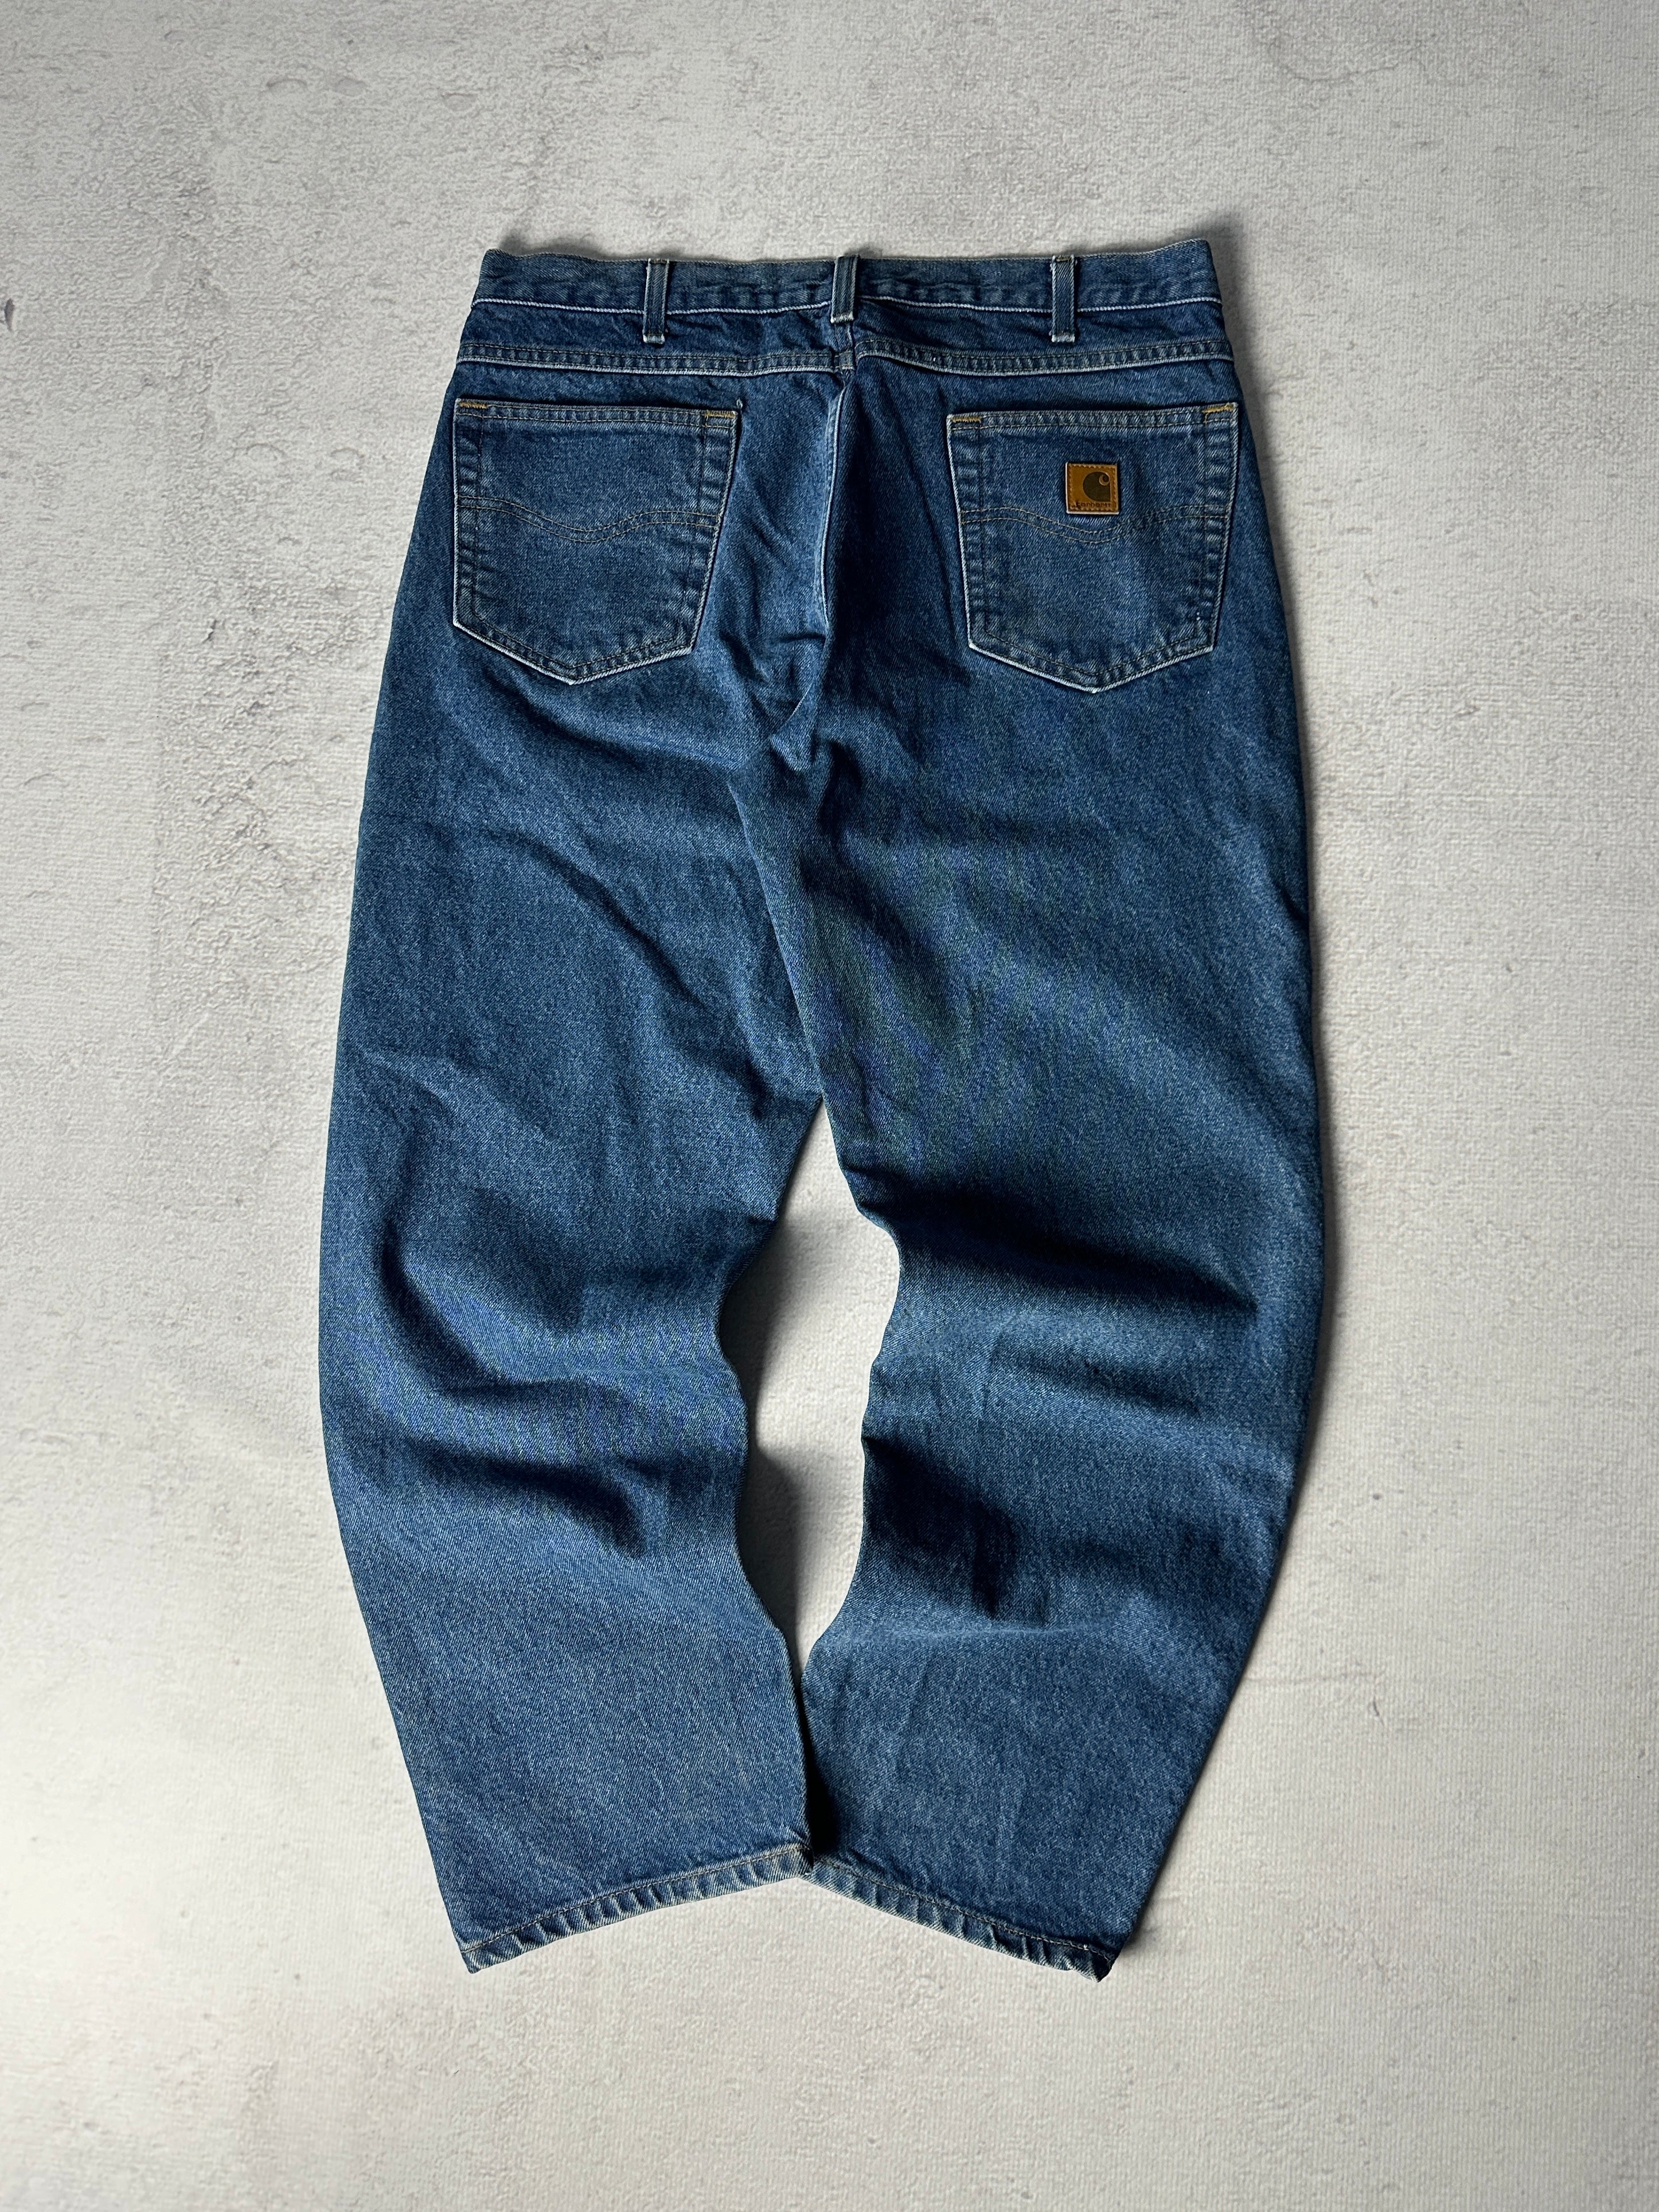 Vintage Carhartt Jeans - Men's 36W30L